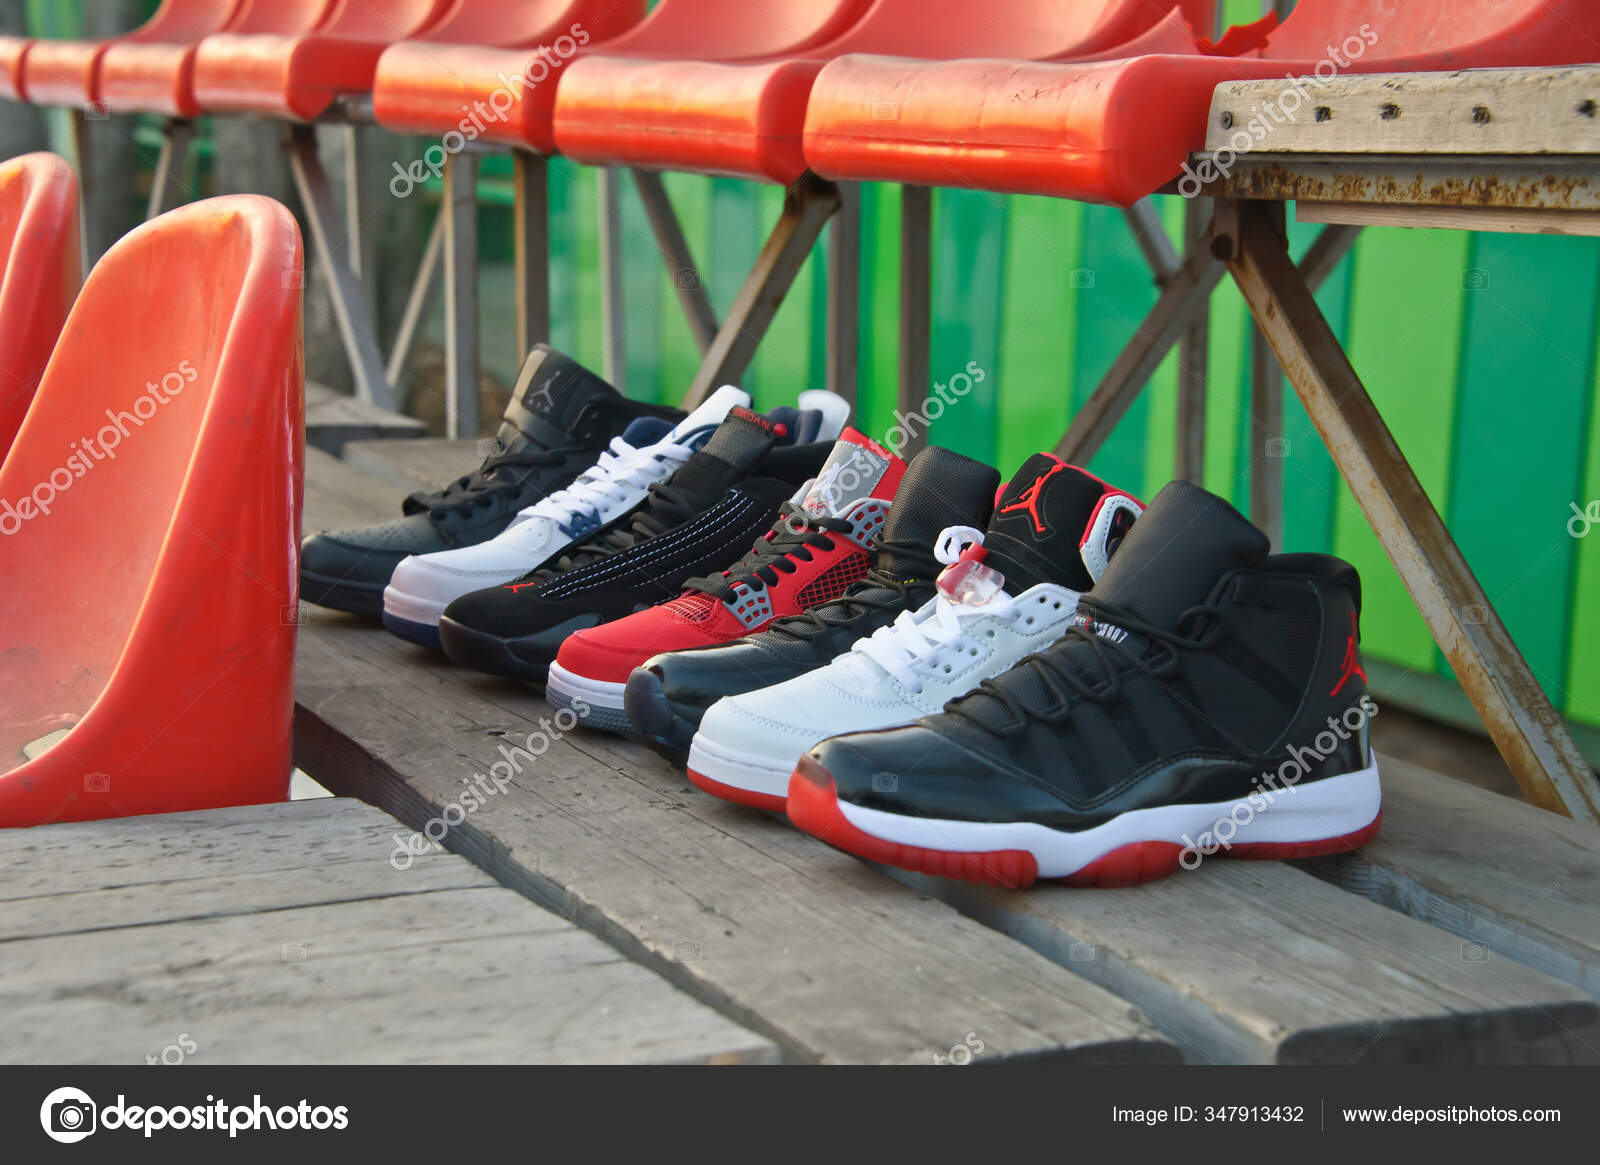 bang Ondergedompeld Ringlet Nike Air Jordan Series Basketball Shoes Collection Different Colors Models  – Stock Editorial Photo © Alavanta #347913432